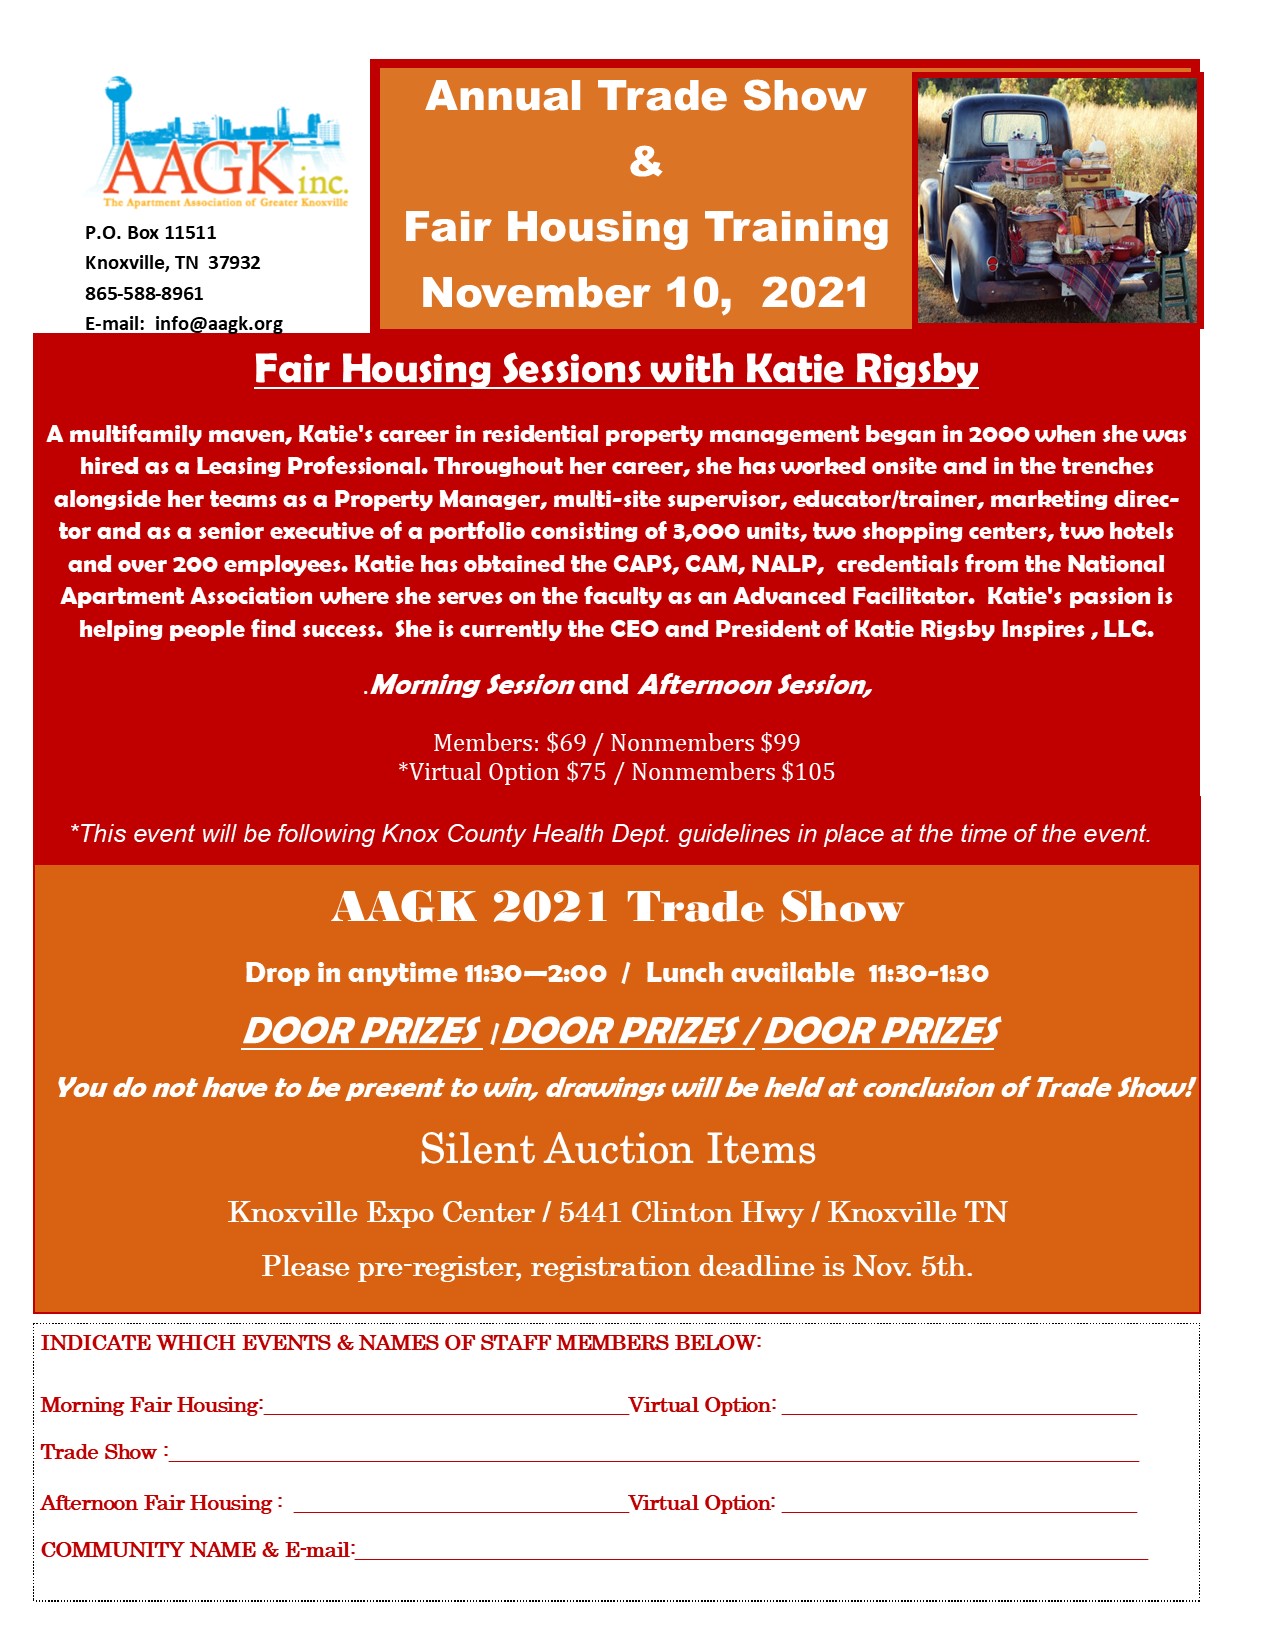 AAGK Trade Show & Fair Housing Registration